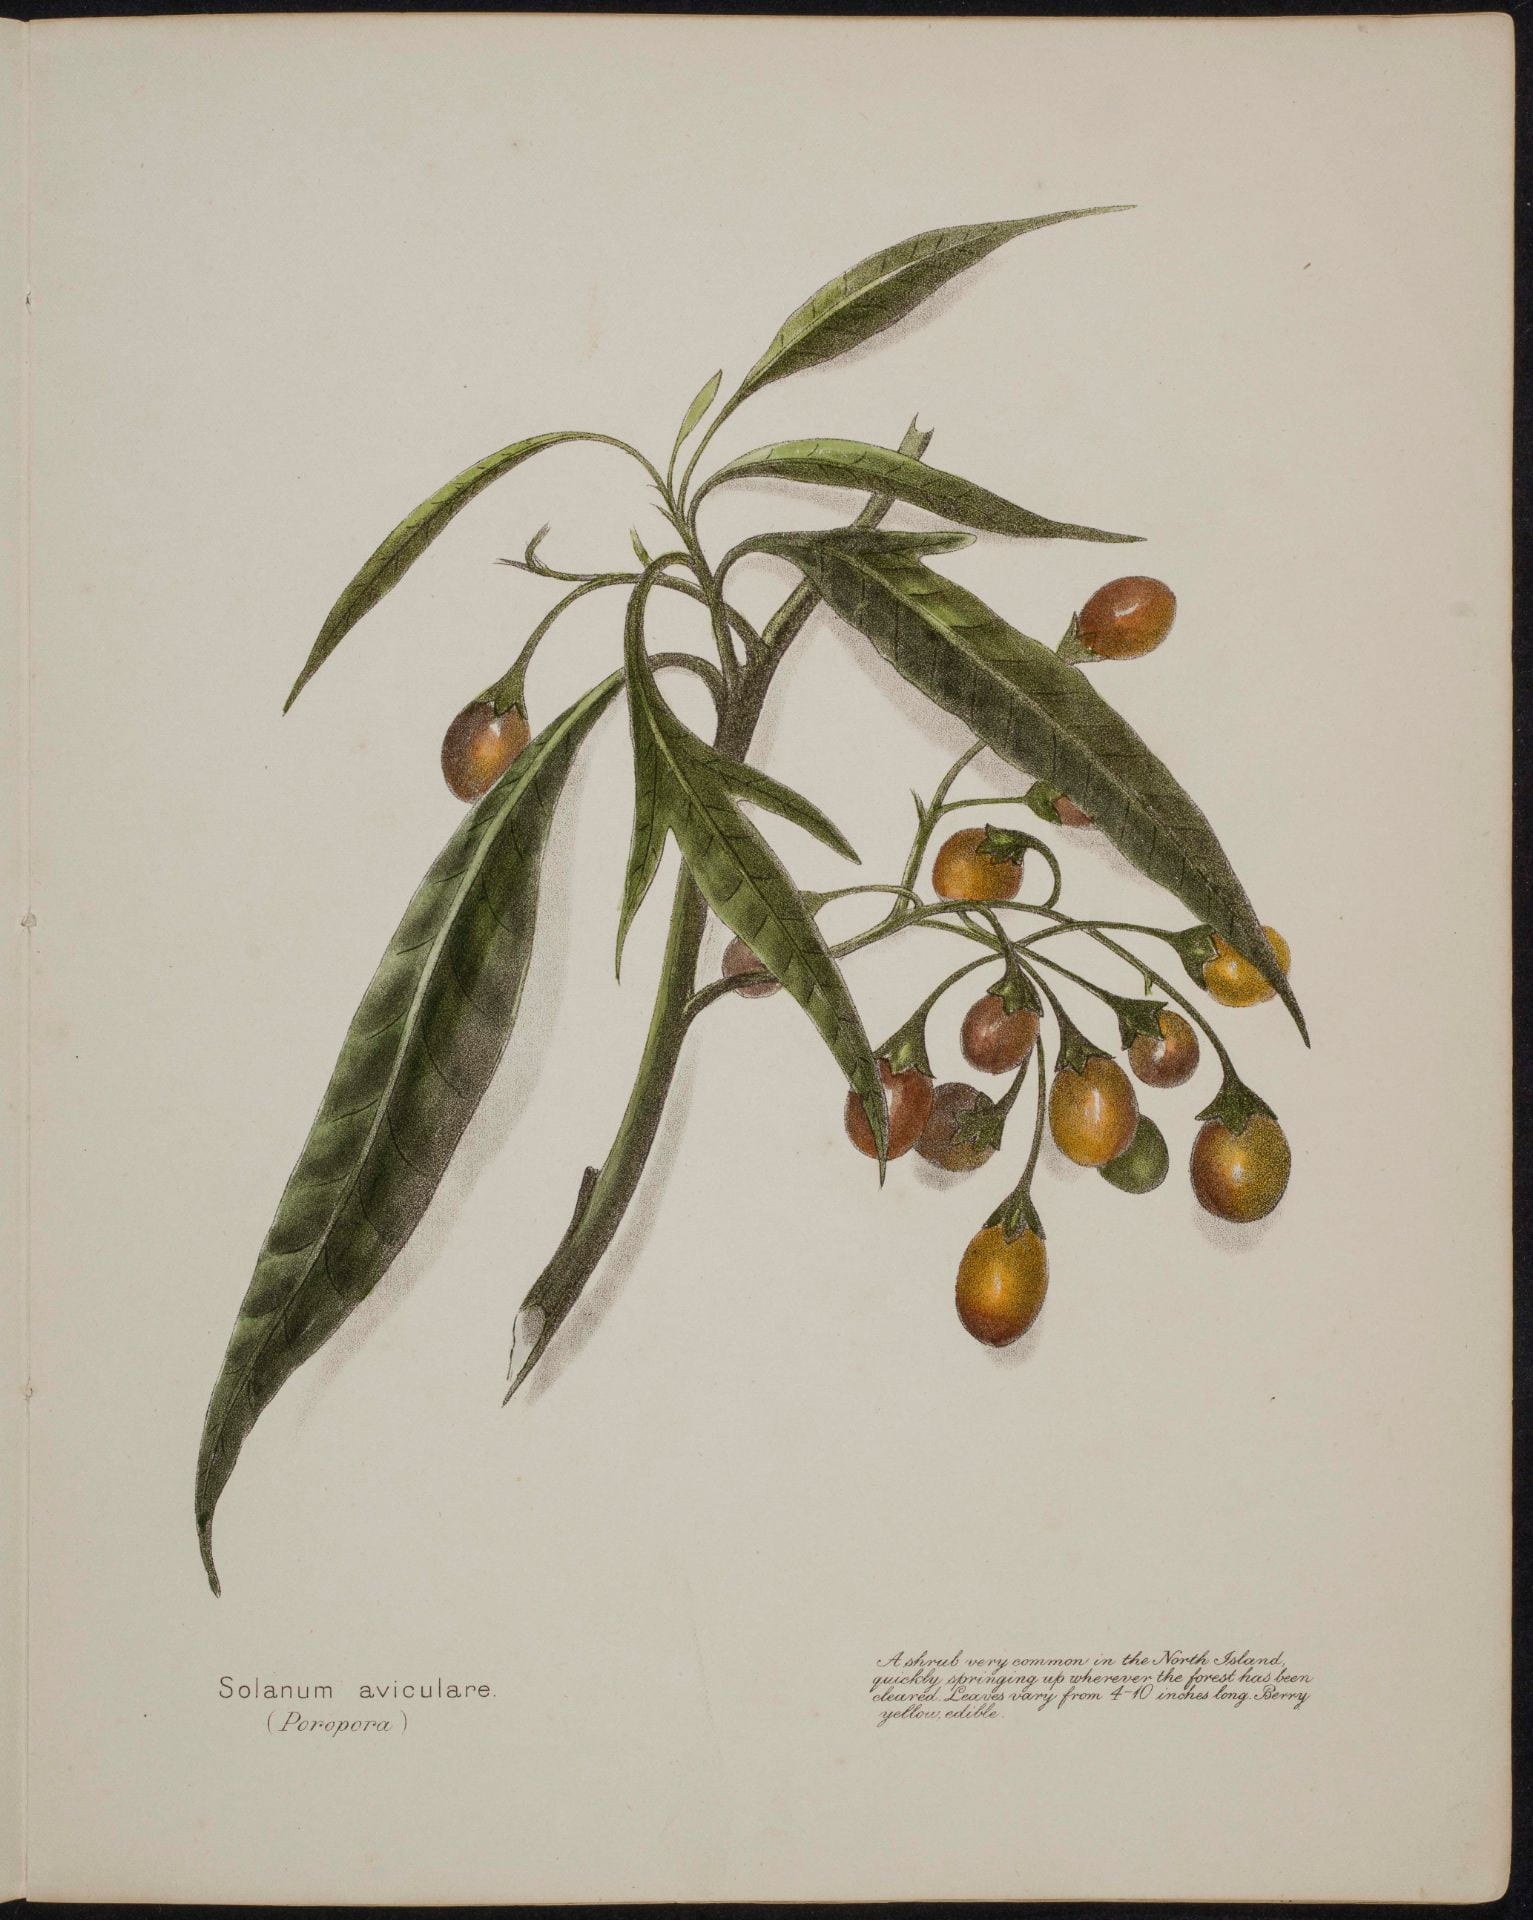 Solanum aviculare poroporo